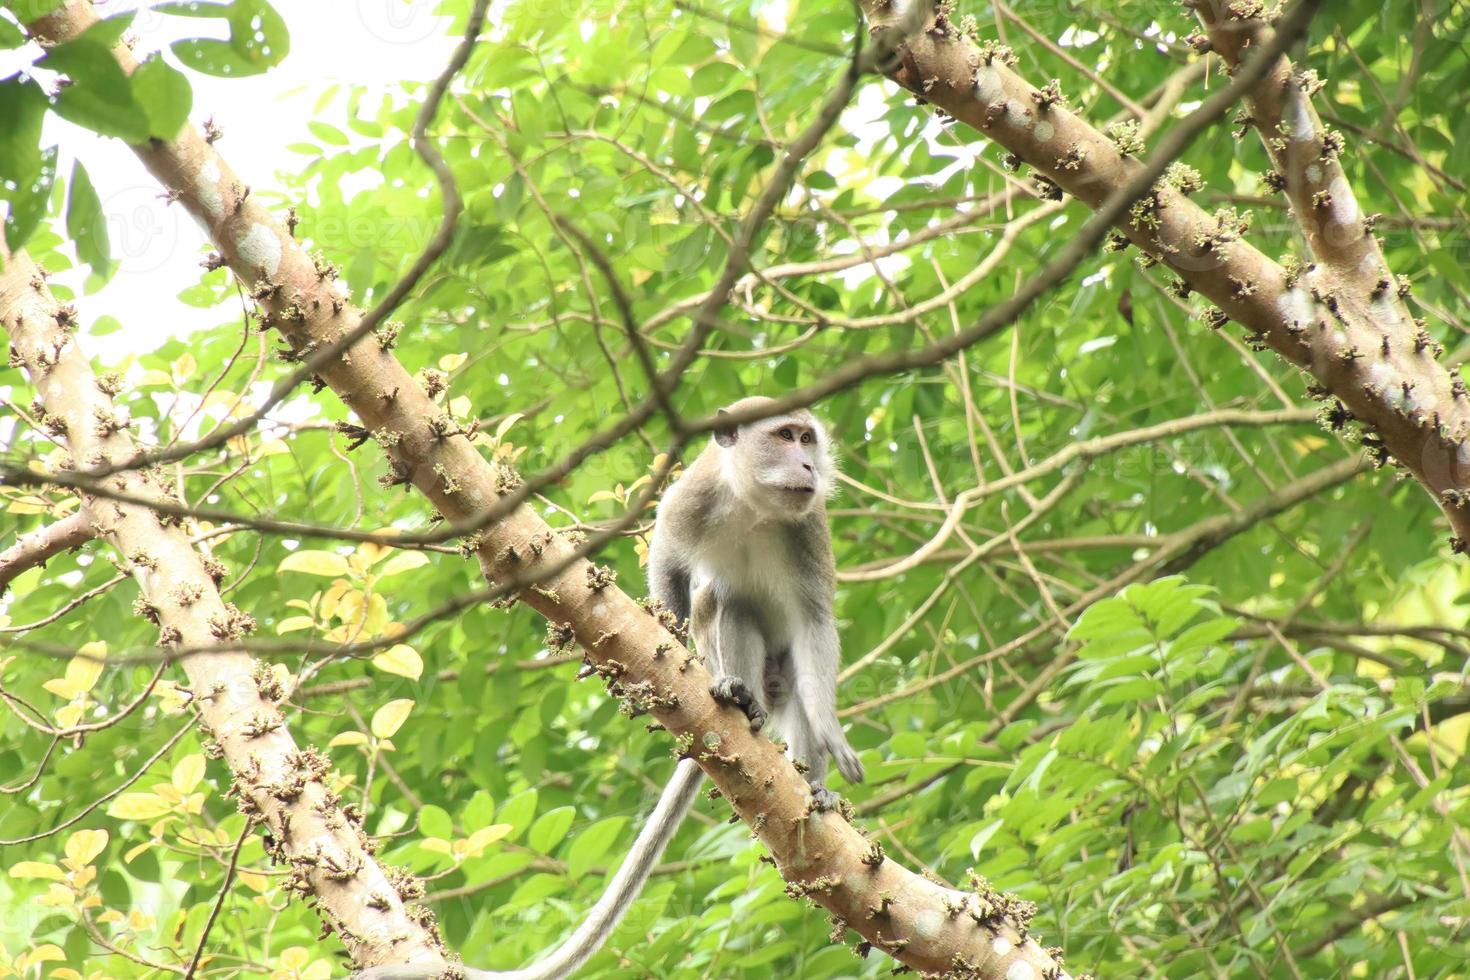 lang staart makaak macaca fascicularis foto